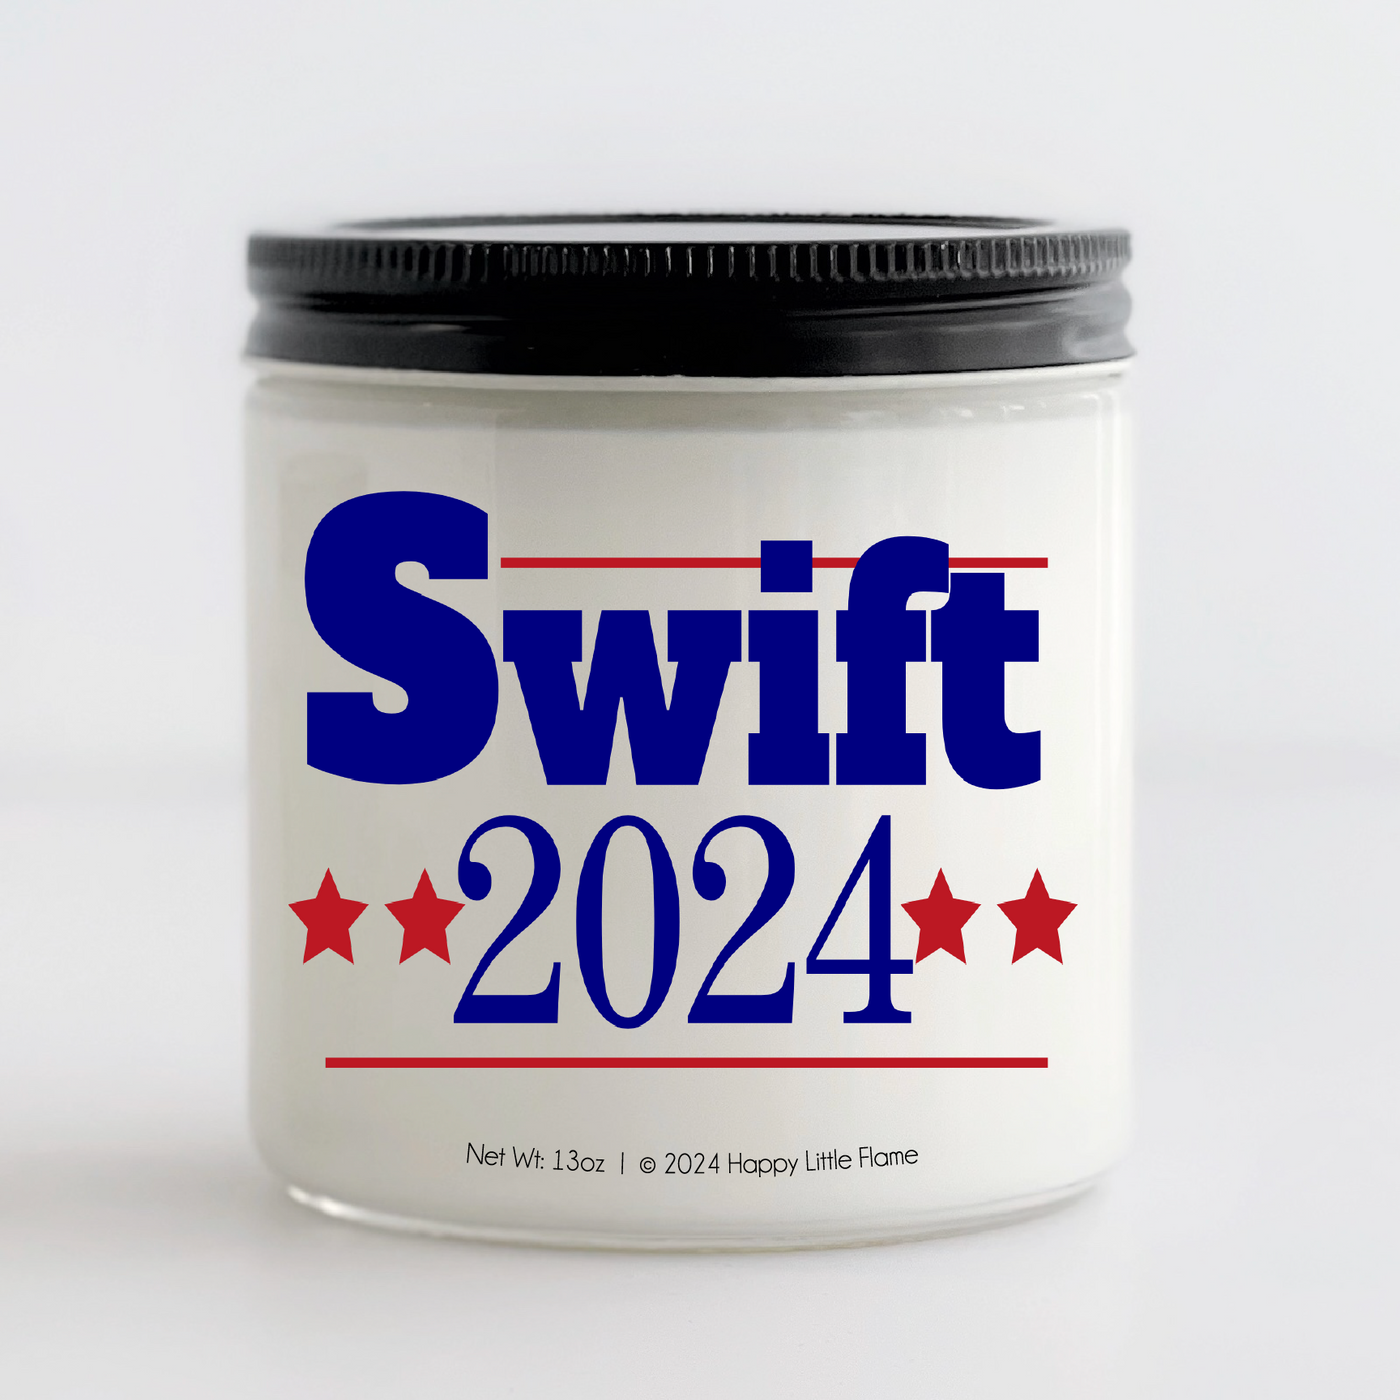 Swift 2024